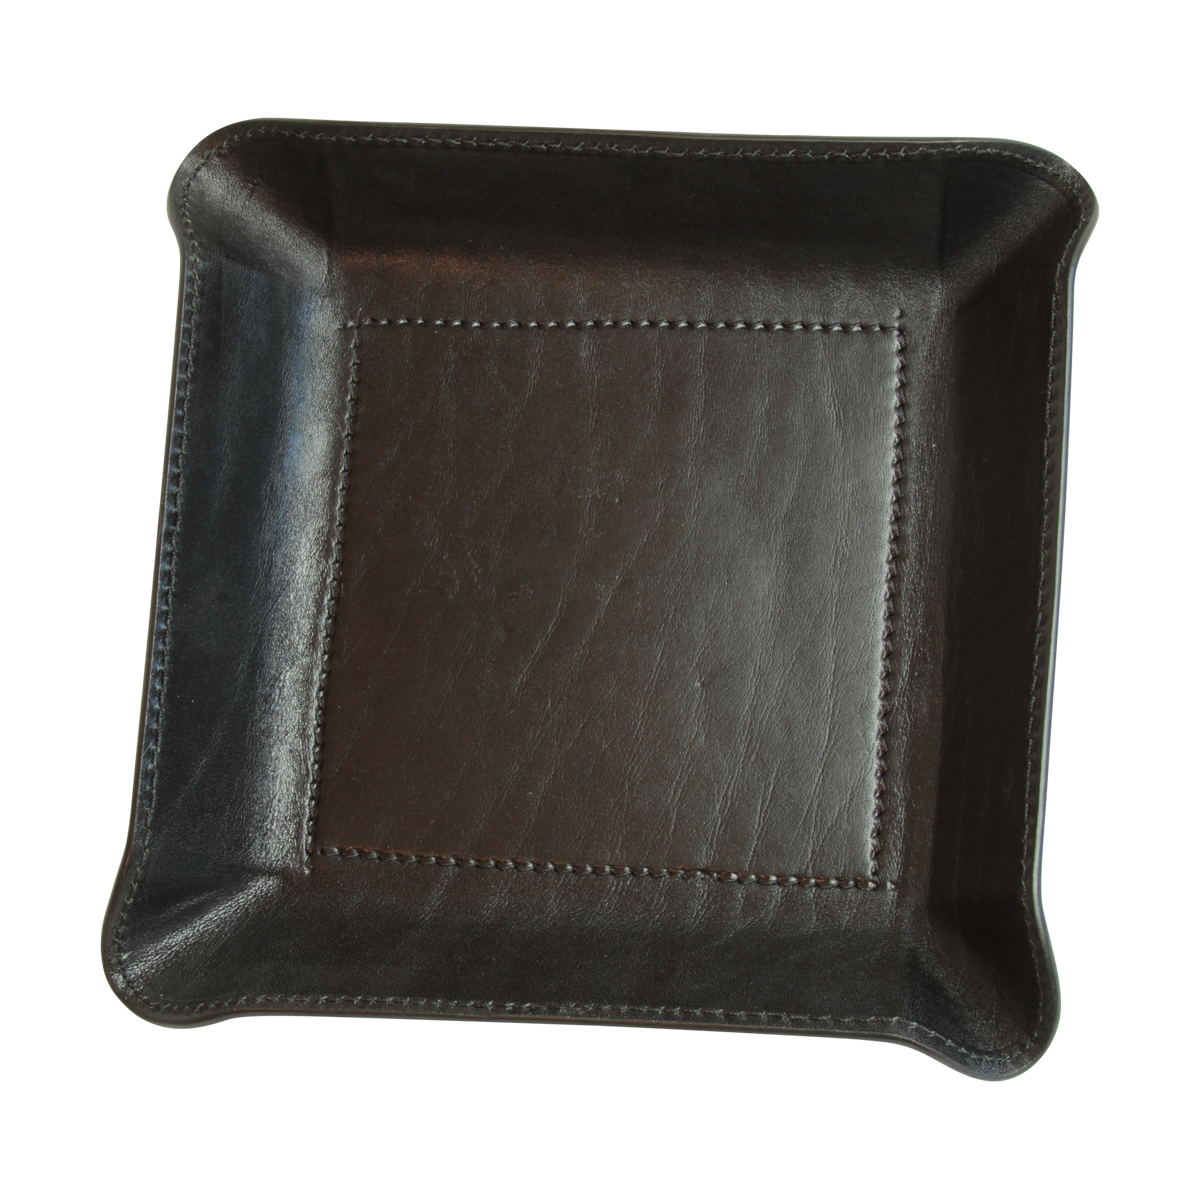 Leather Catchall Tray - Black | 751089NE US | Old Angler Firenze